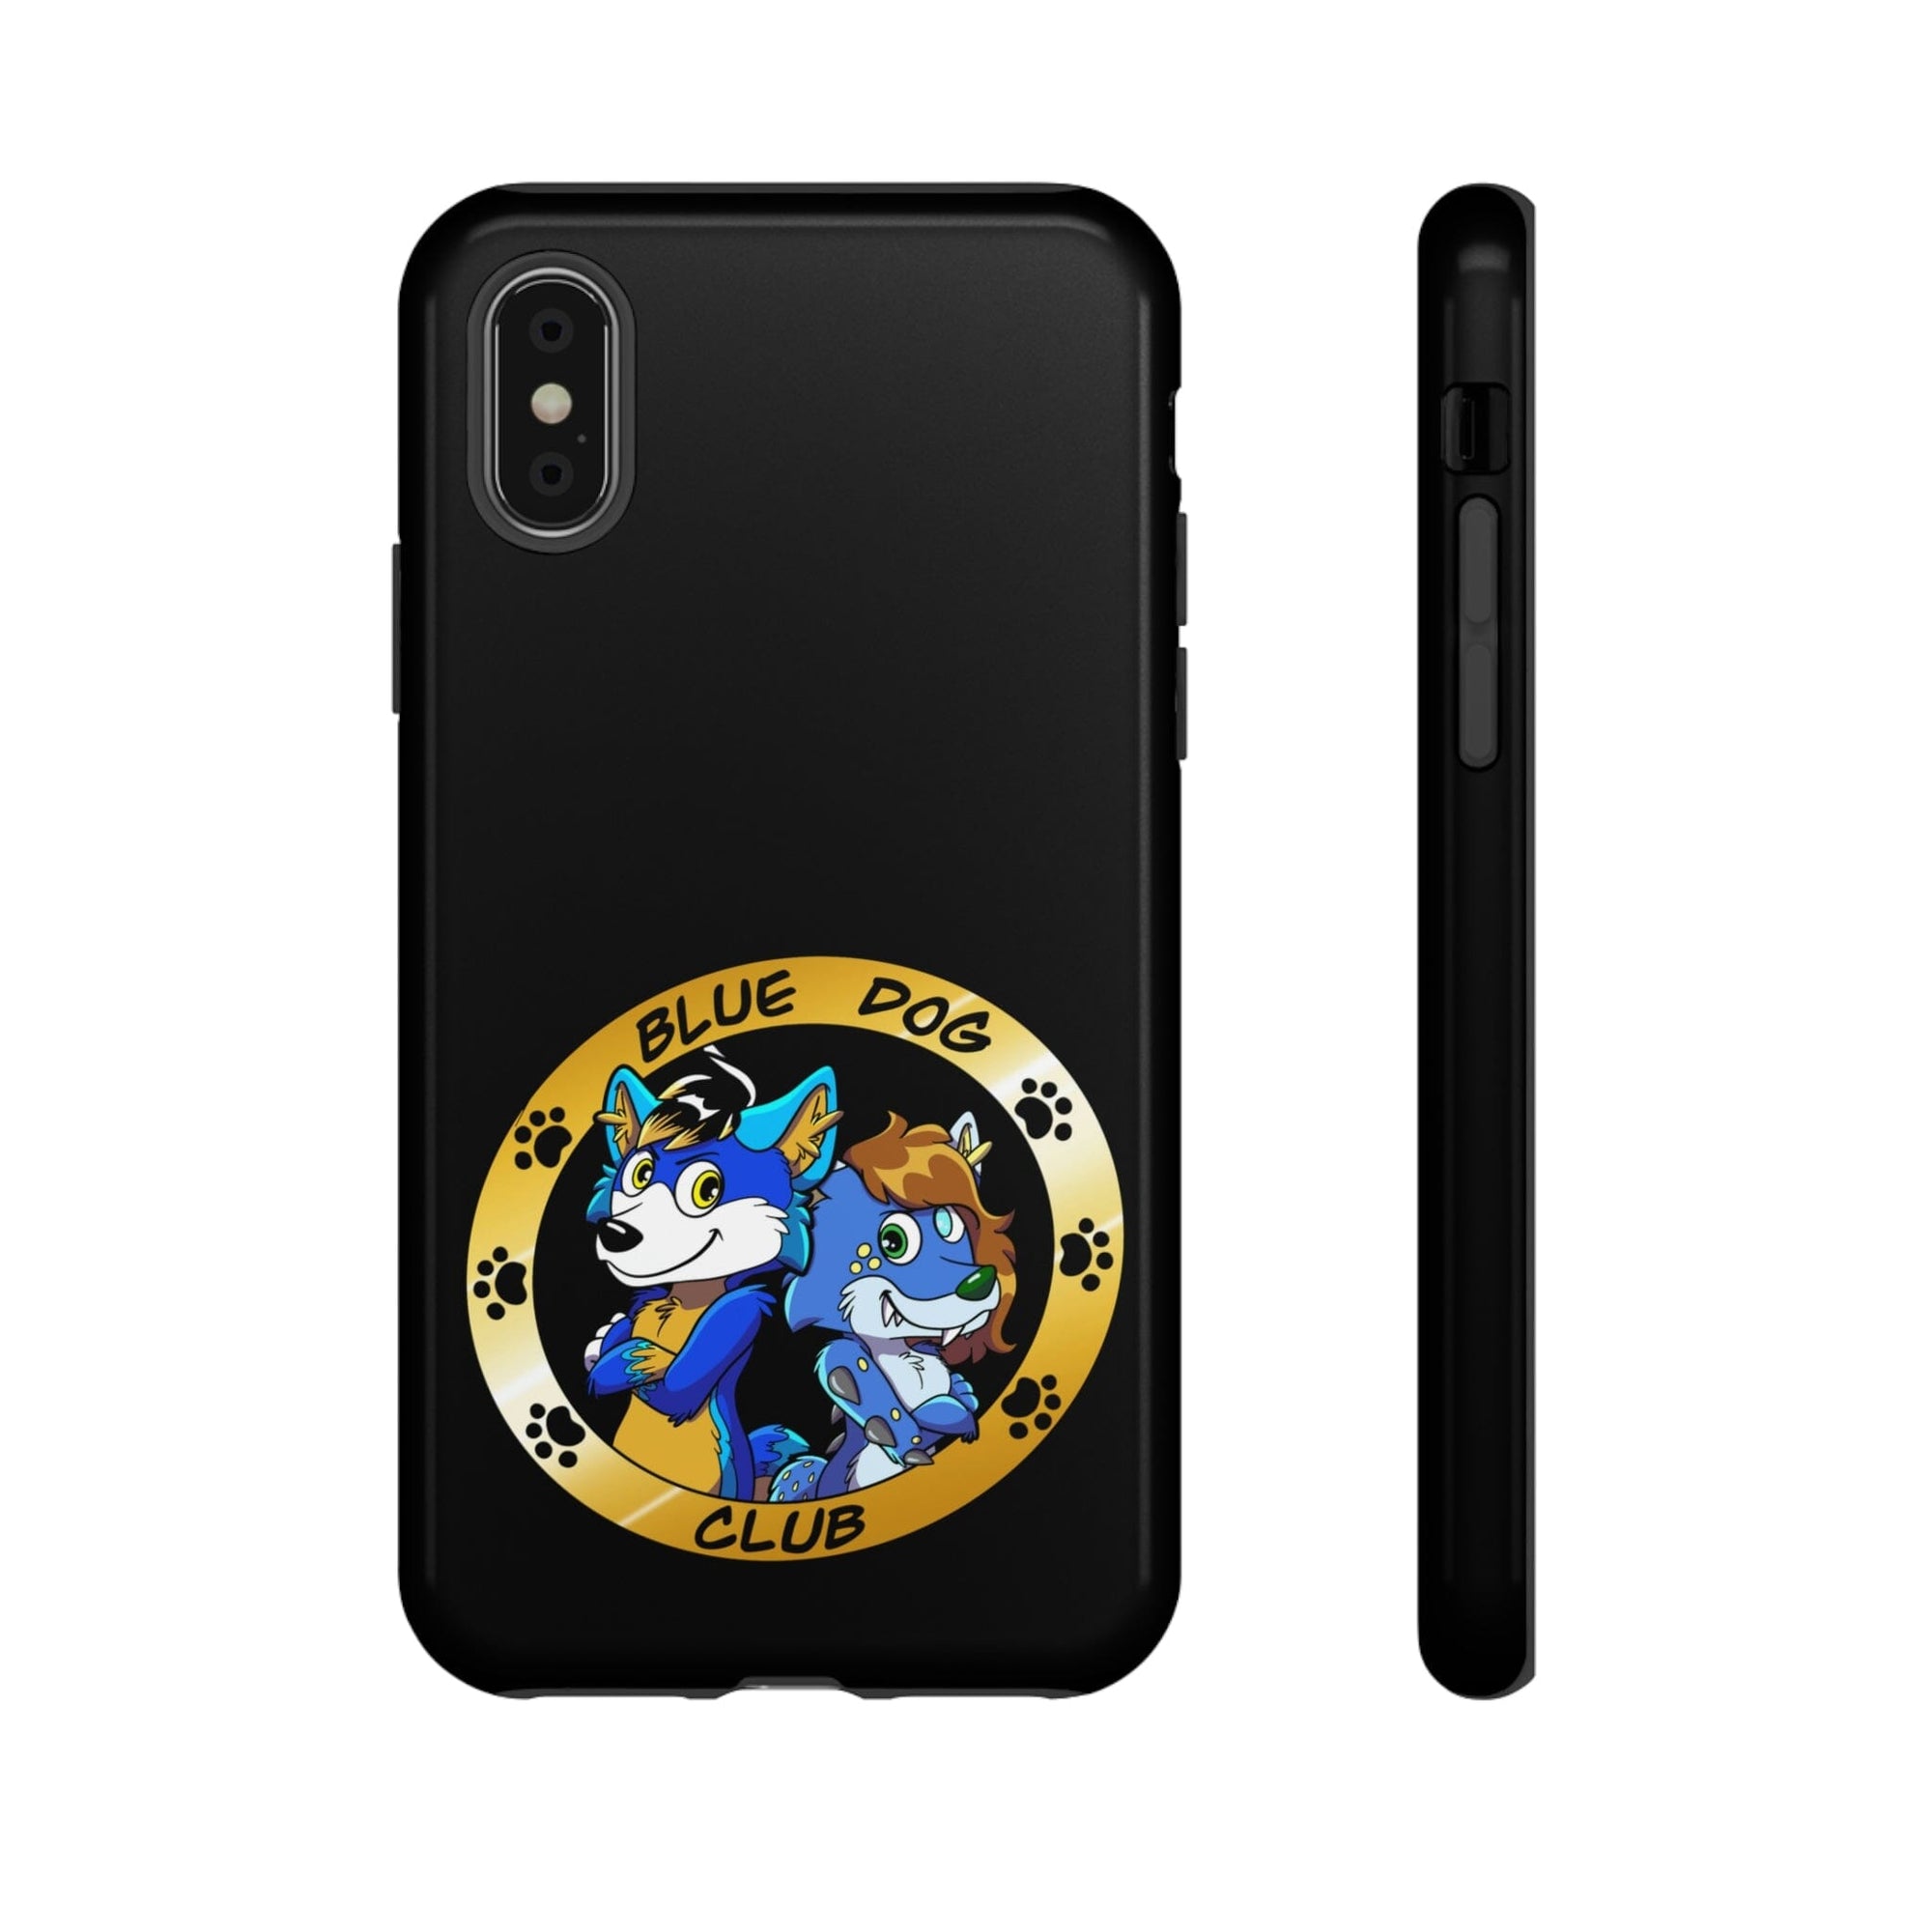 Hund The Hound - Blue Dog Club - Phone Case Phone Case Printify iPhone X Glossy 